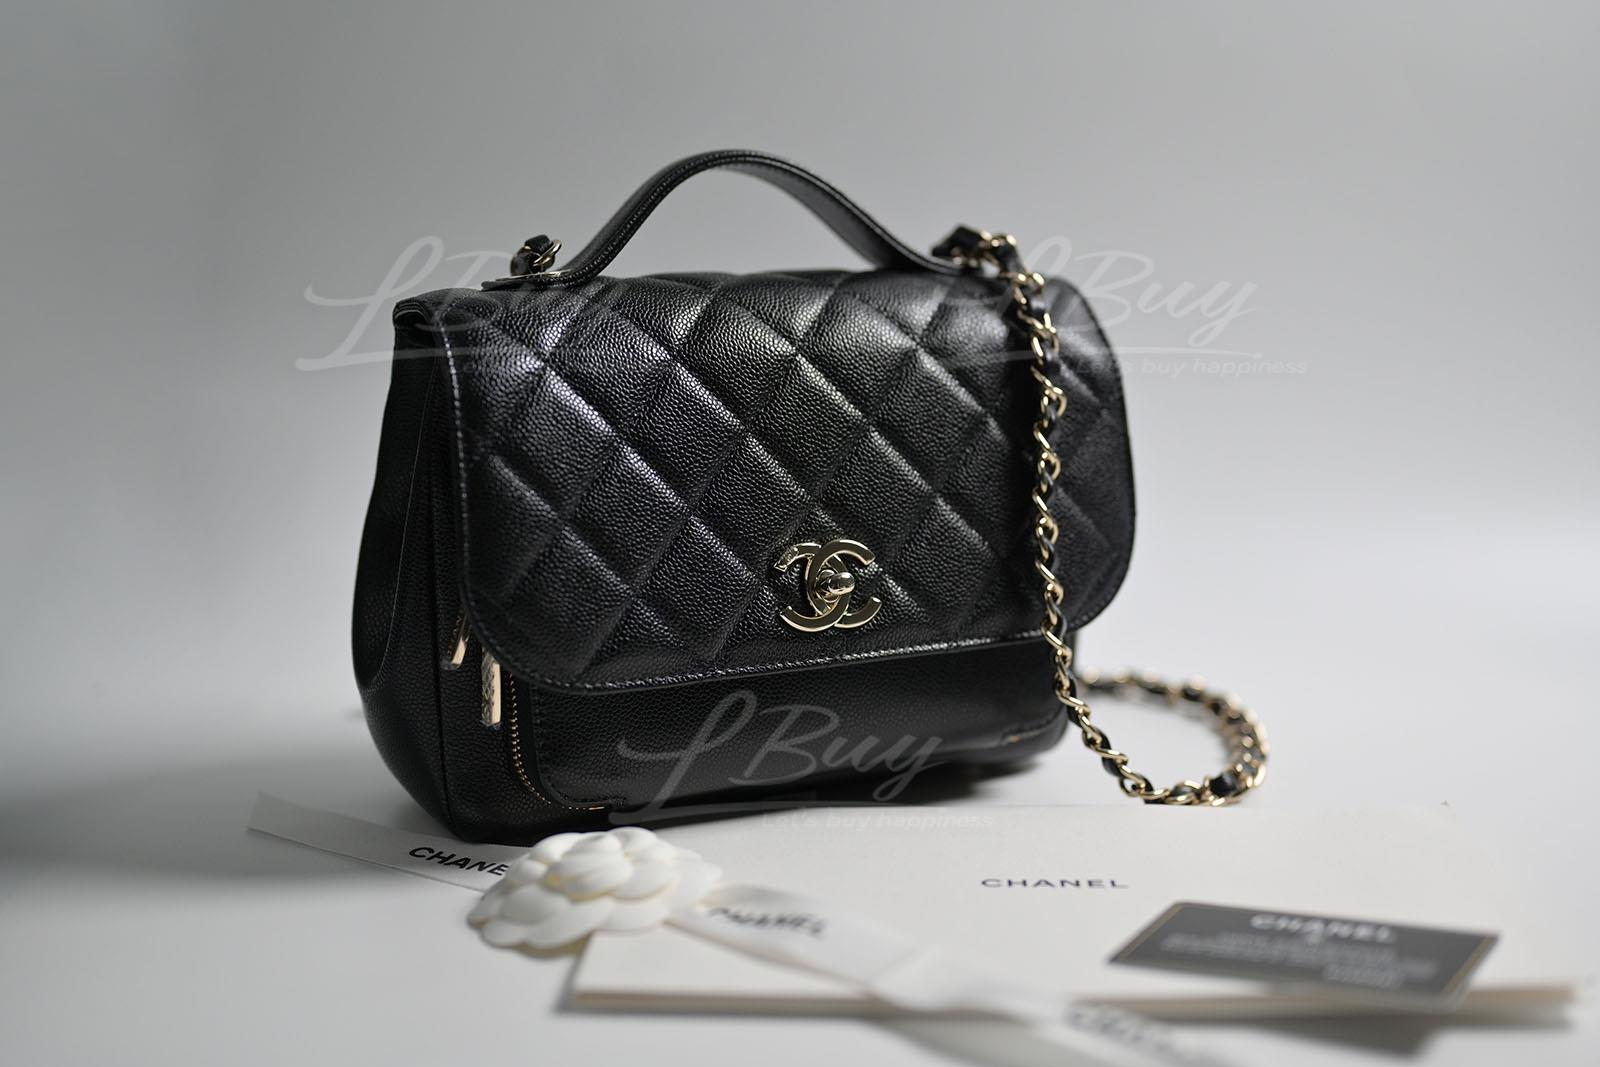 CHANEL-Chanel Affinity Medium Size Black Flap Bag